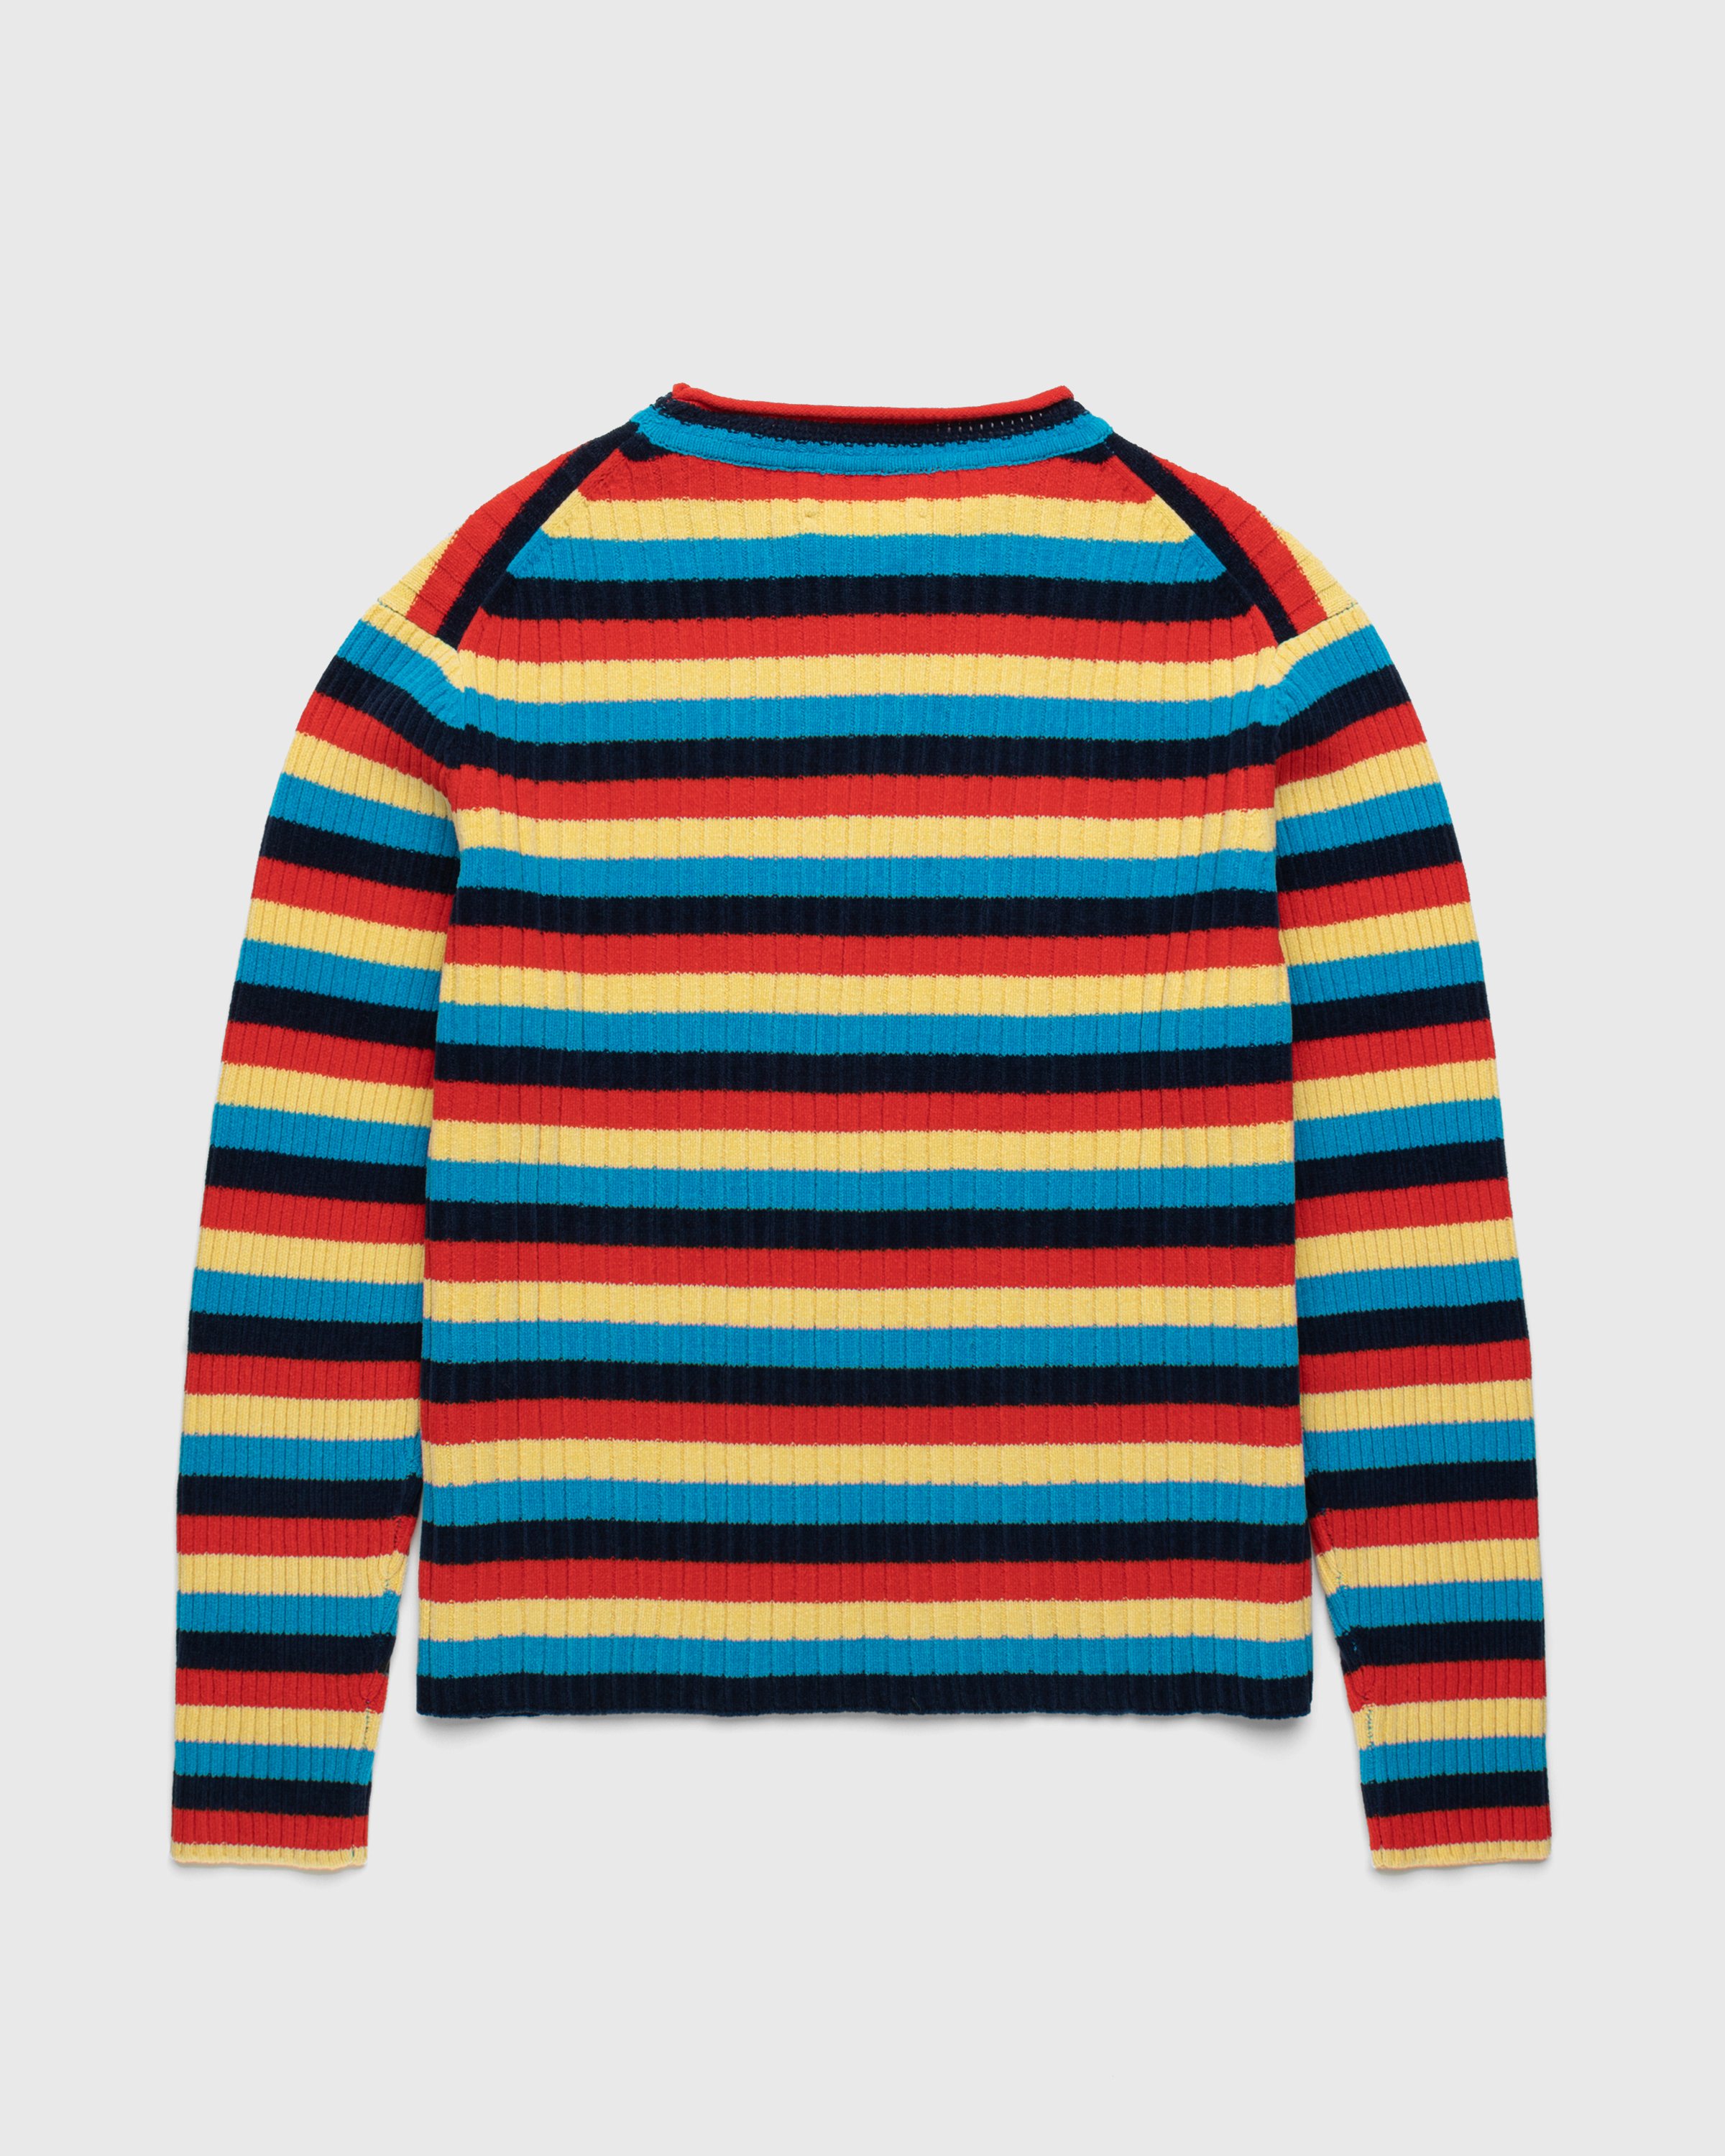 Wales Bonner - Choir Sweater Multi - Clothing - Multi - Image 2